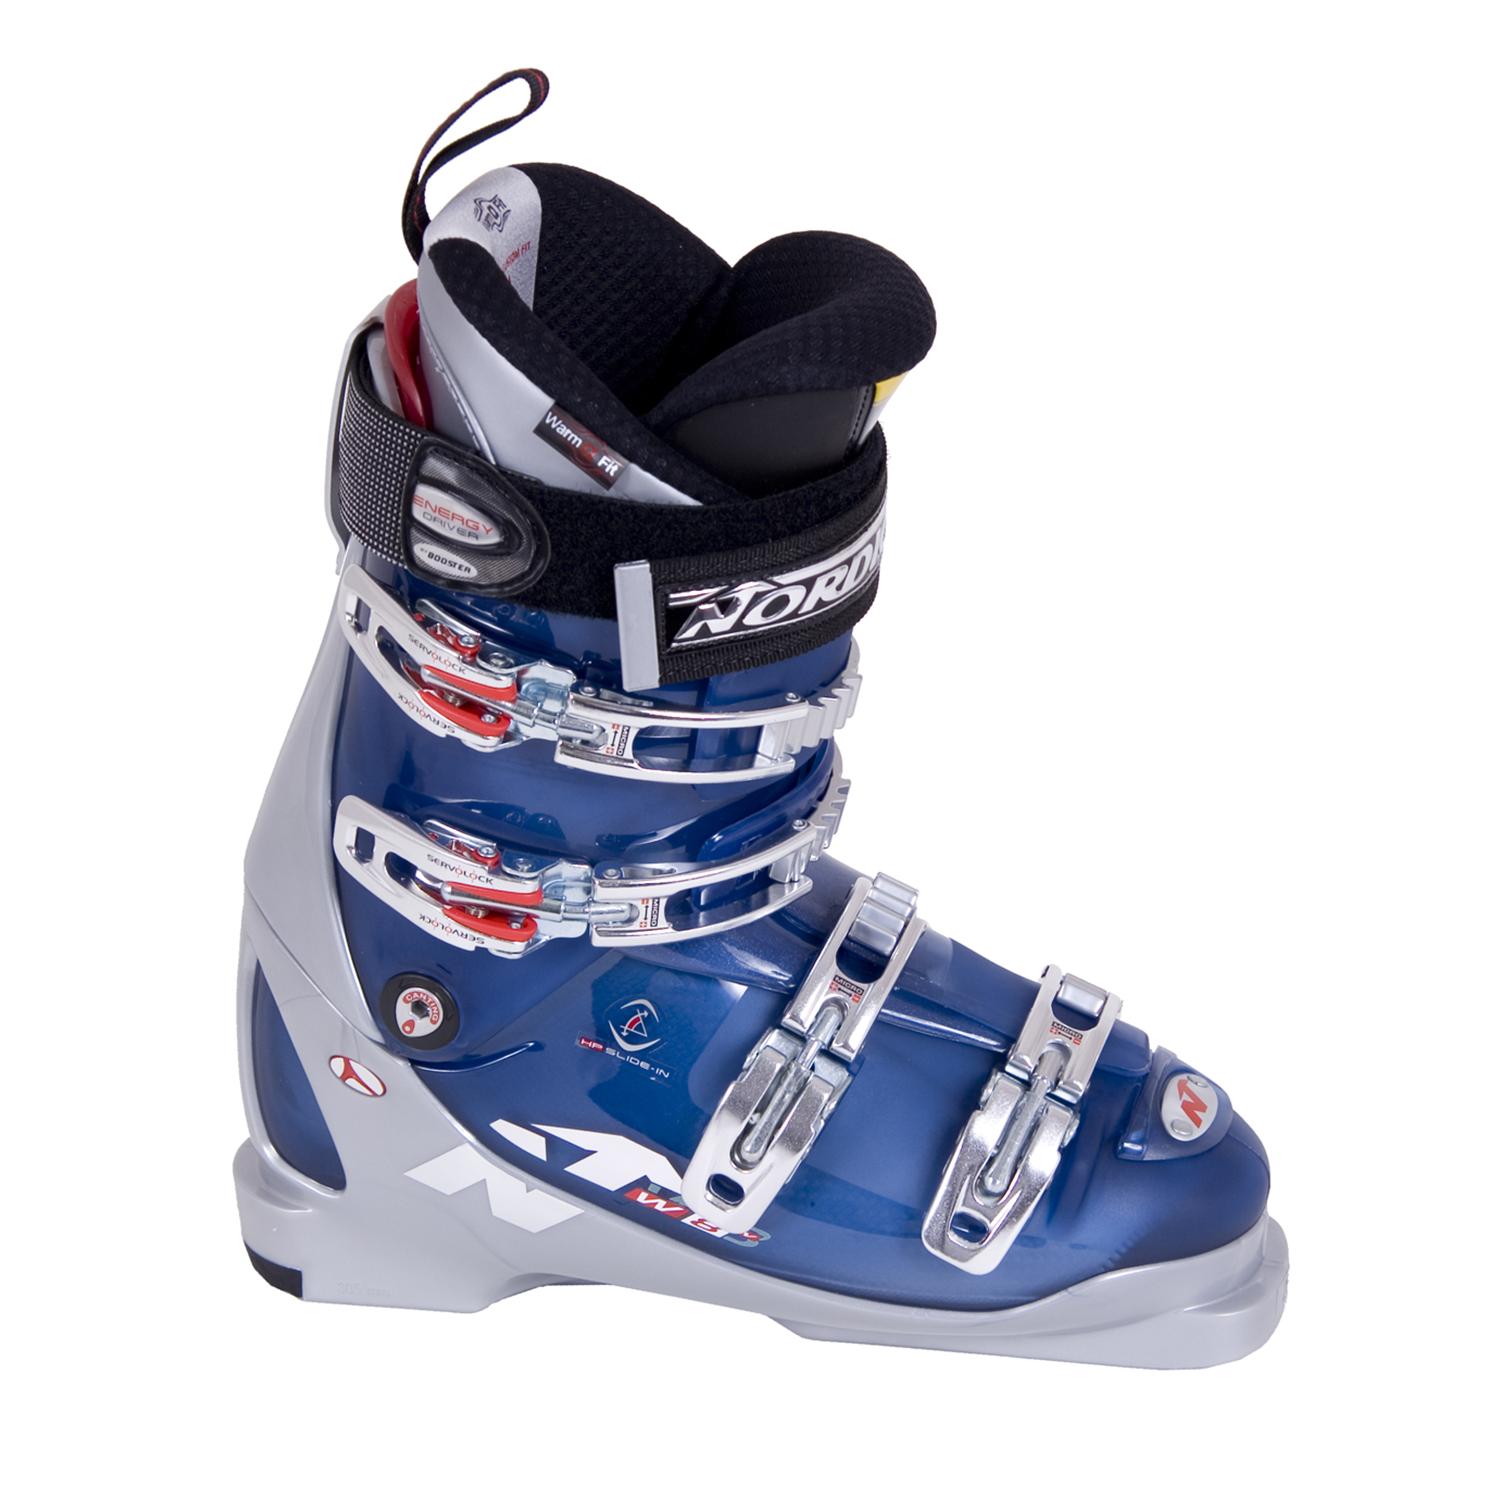 Nordica W8 Women's Ski Boots 2004 | evo outlet